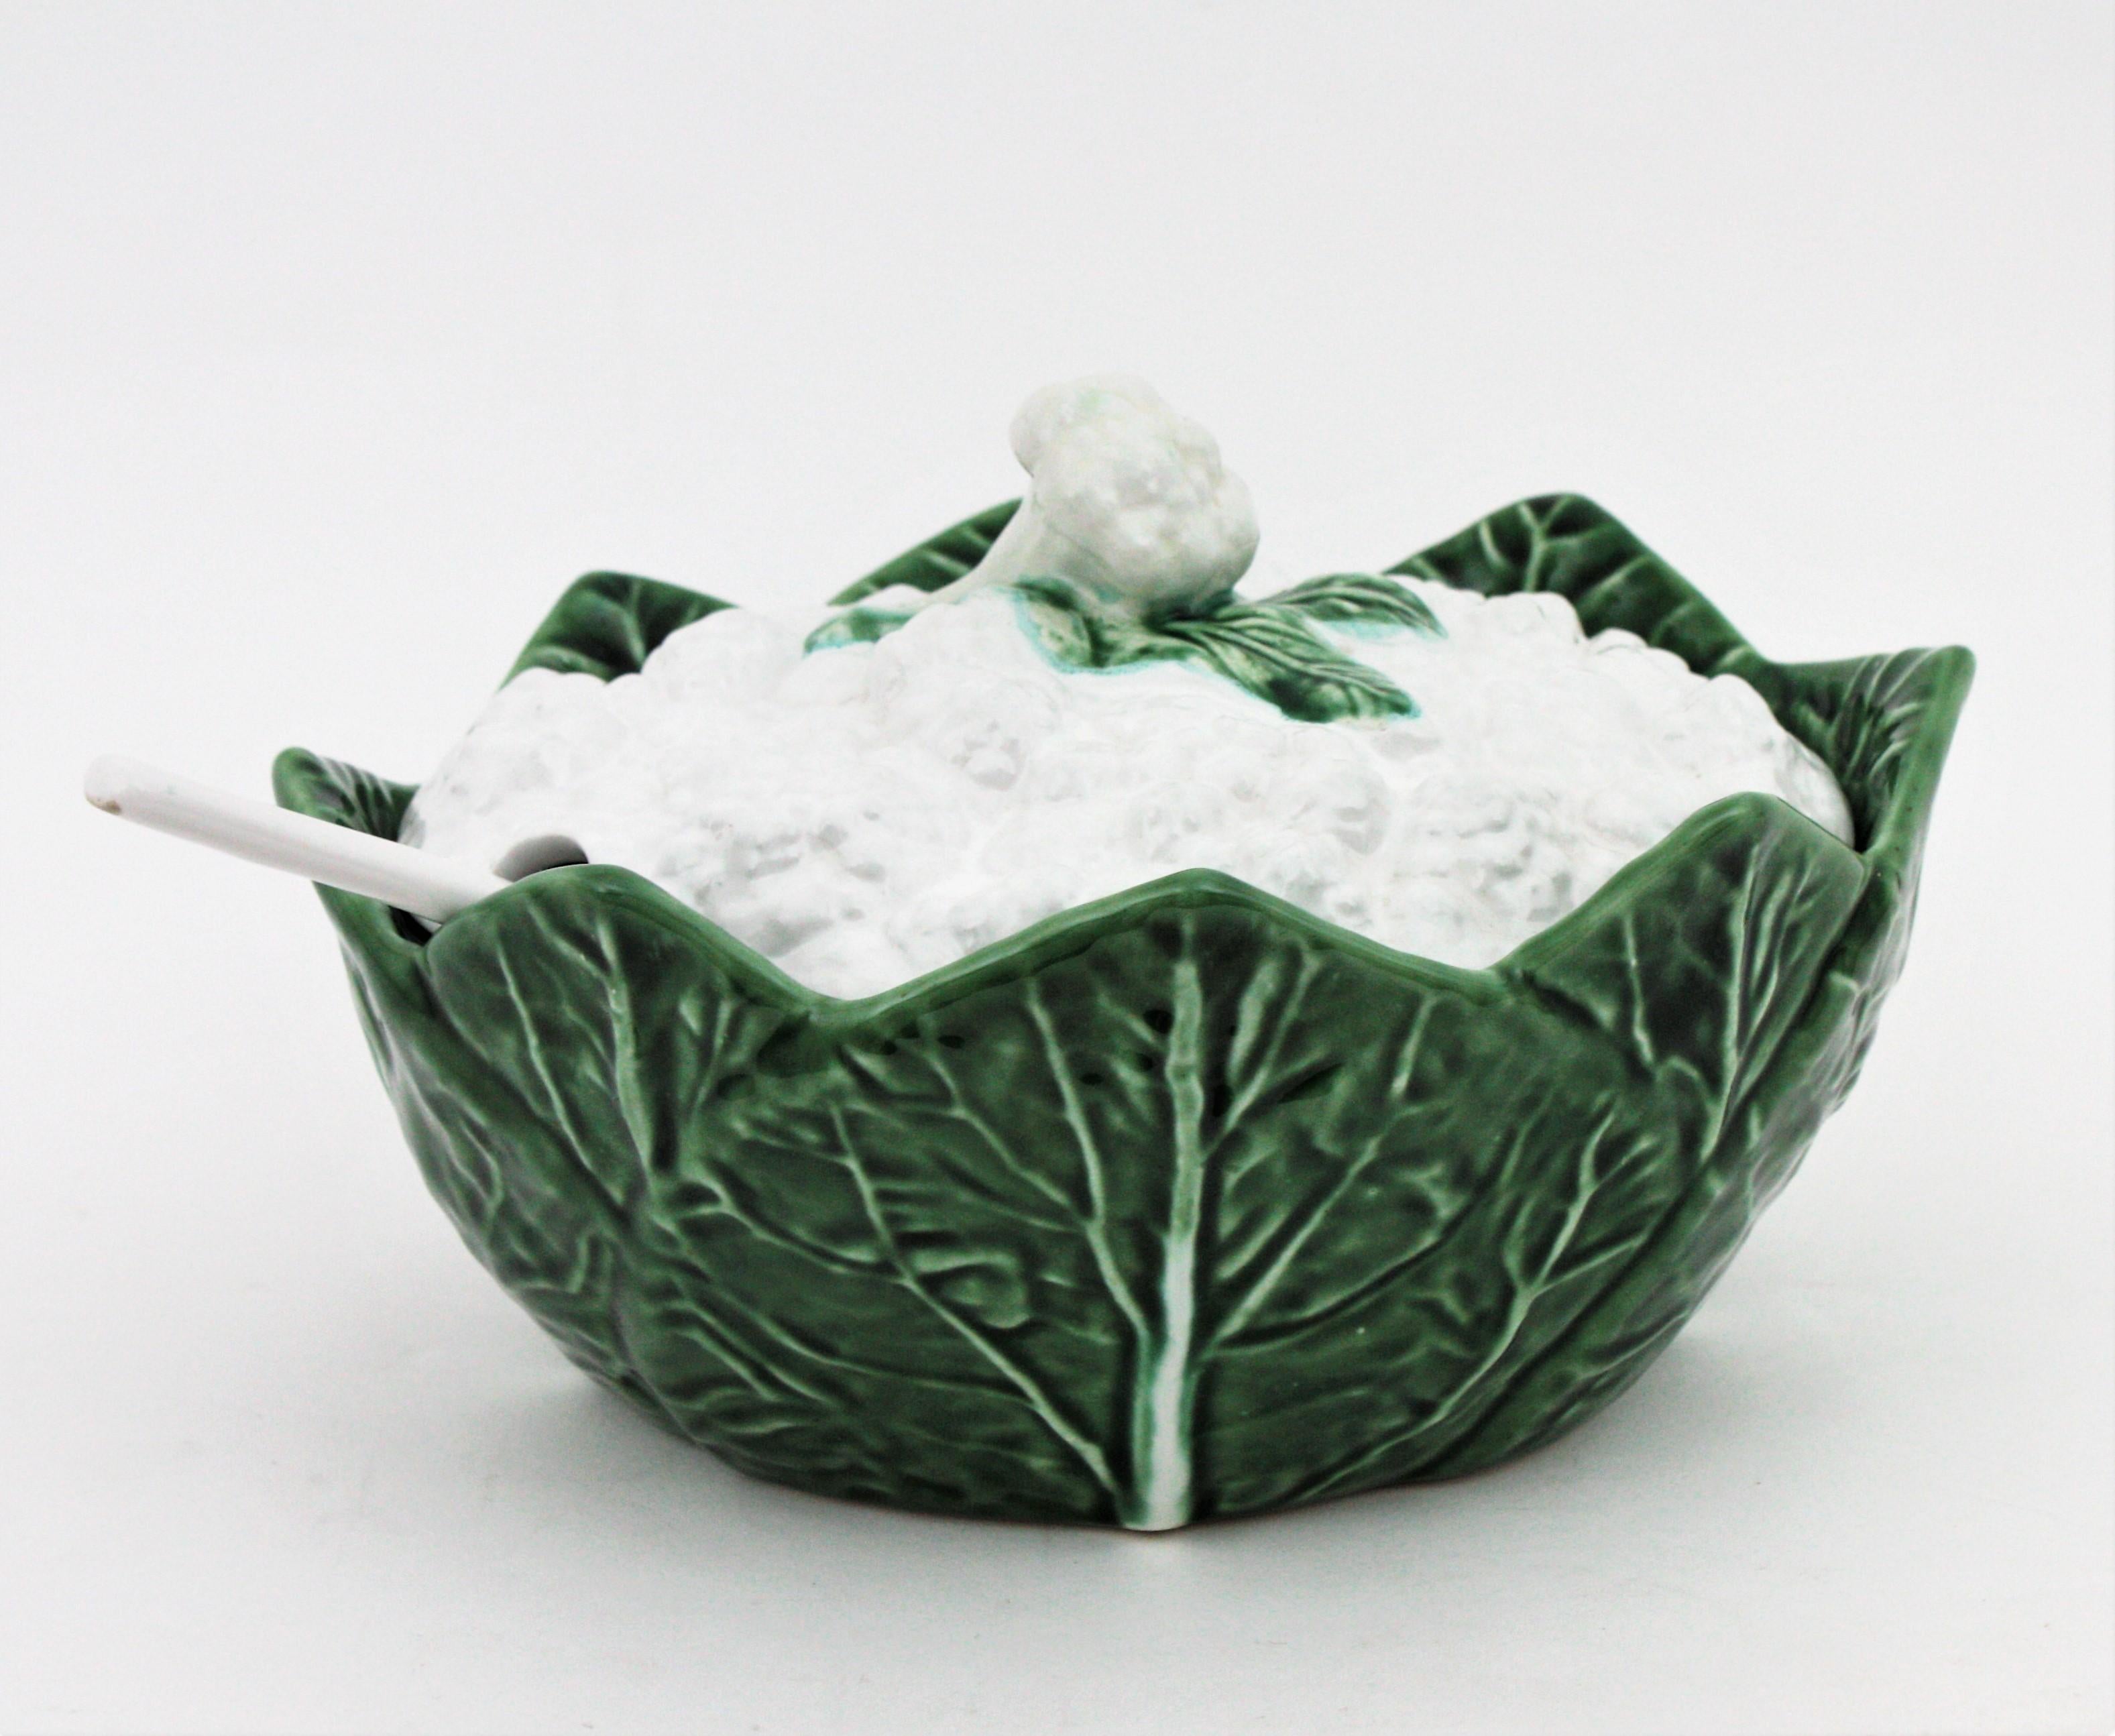 Majolica Cauliflower Tureen Centerpiece in Glazed Ceramic, 1960s For Sale 2